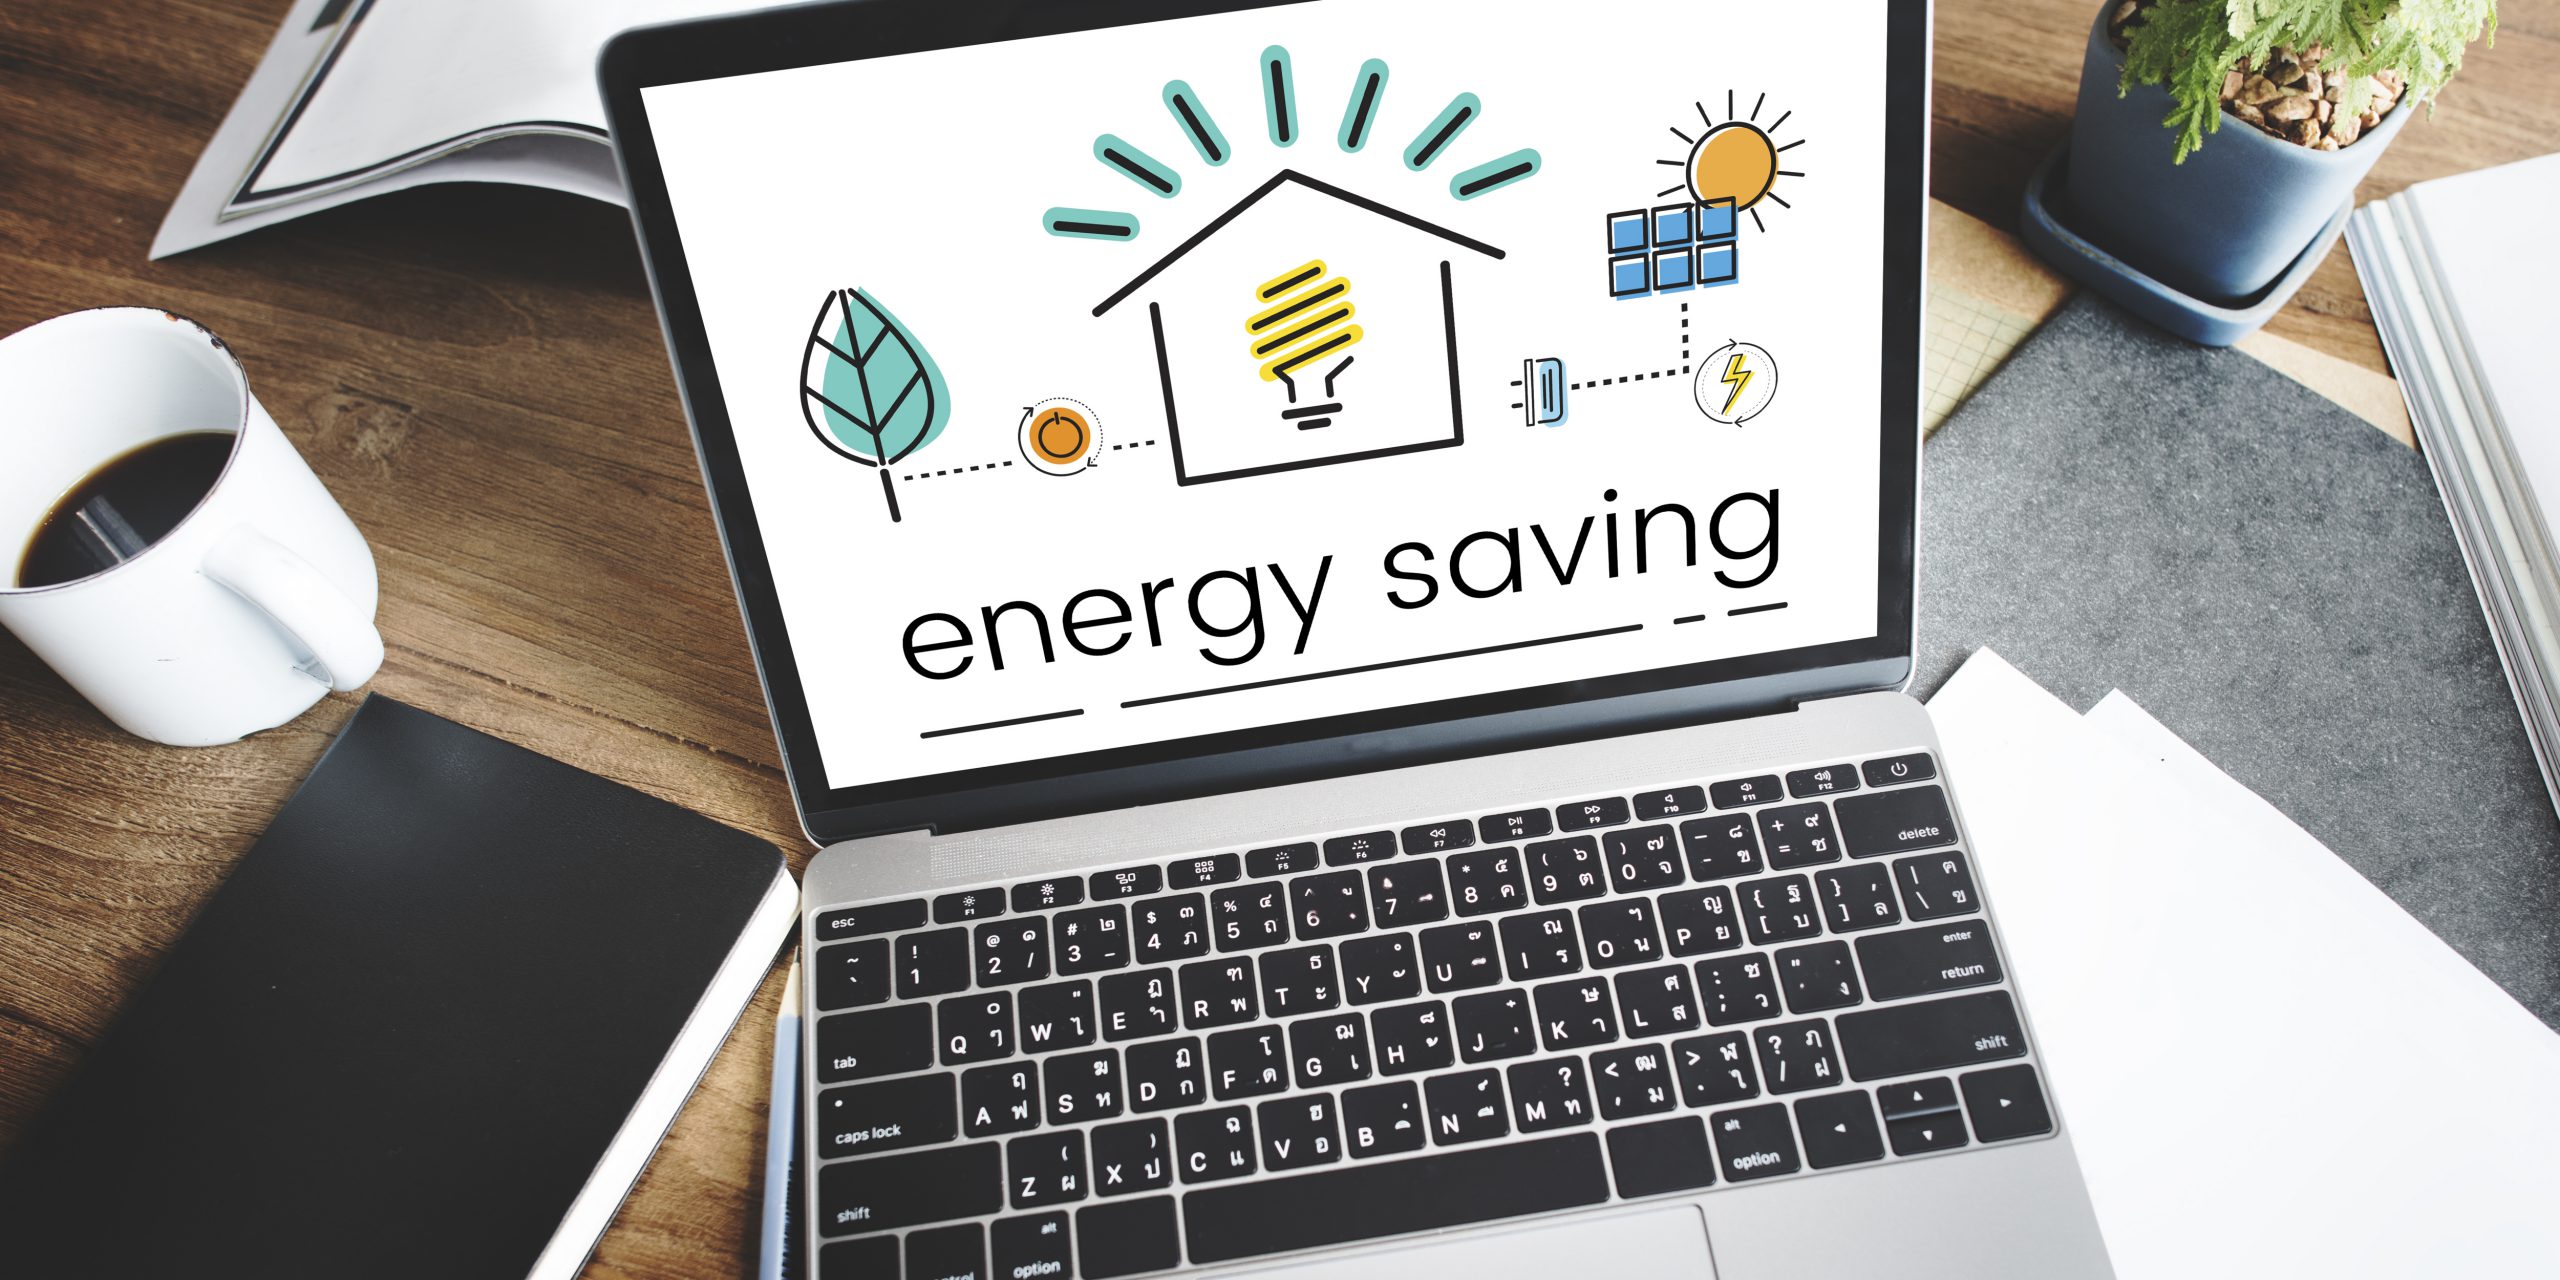 Saving energy around the office